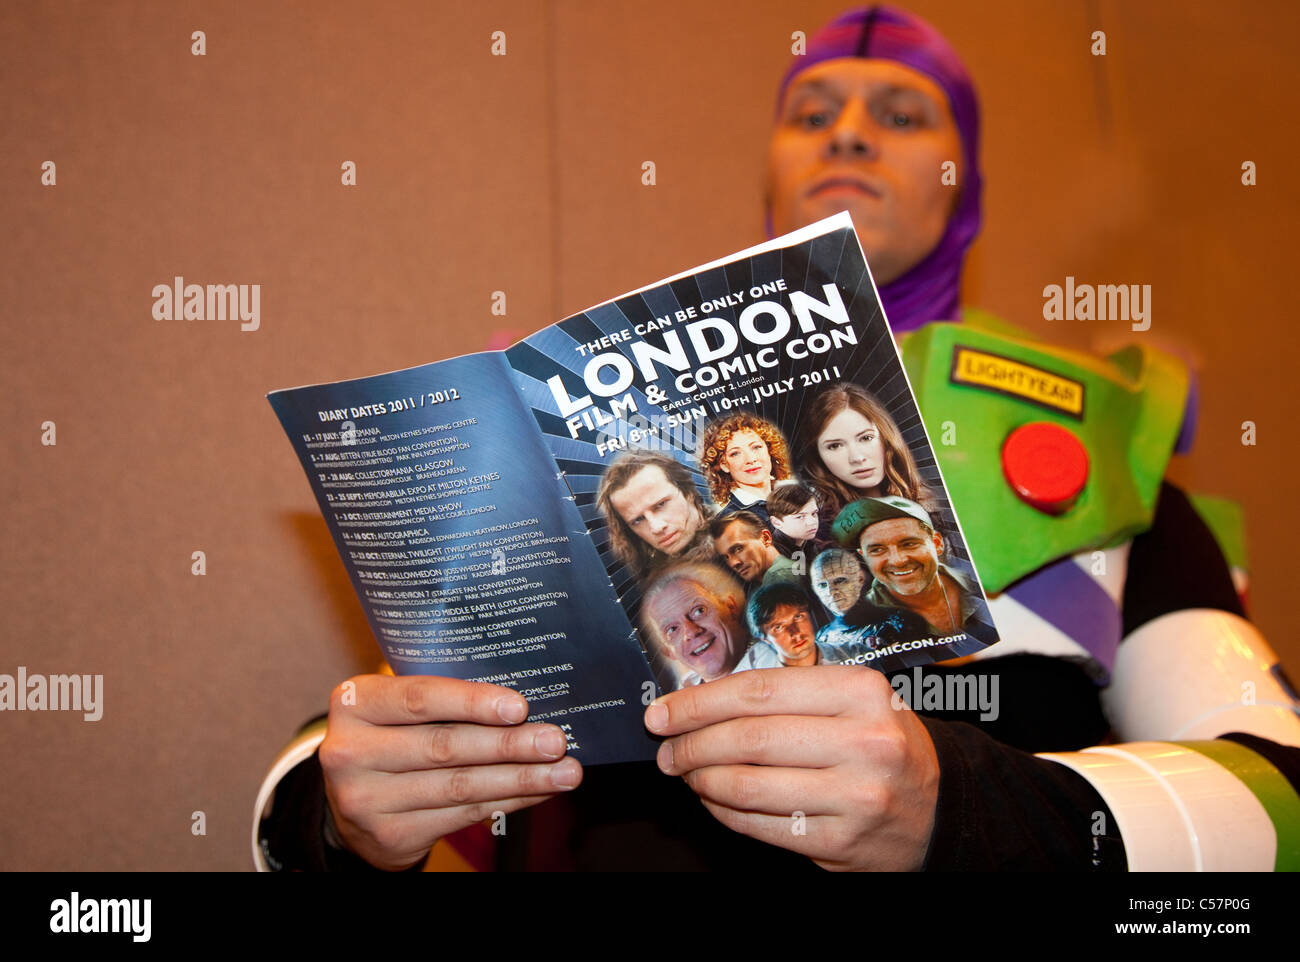 London Film & Comic Con 2011: Buzz Lightyear character Stock Photo